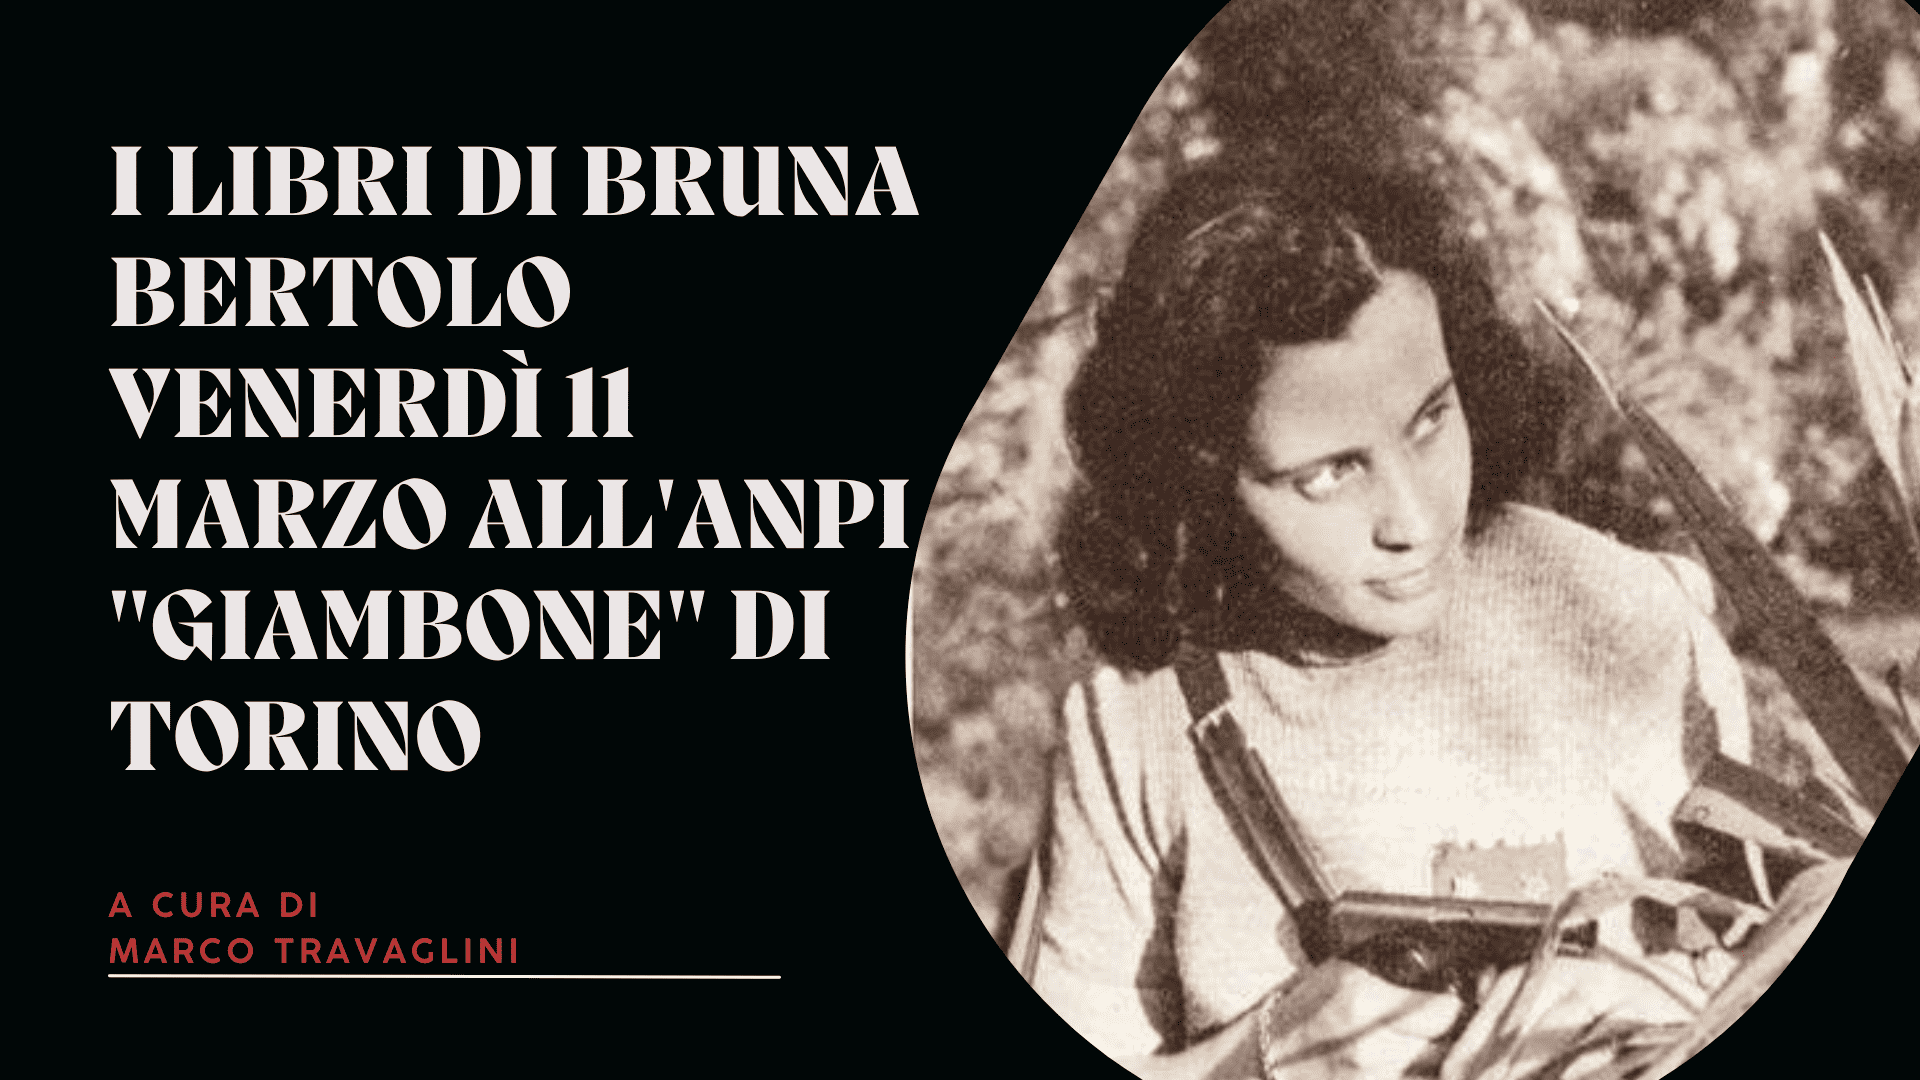 I libri di Bruna Bertolo venerdì 11 marzo all'Anpi "Giambone" di Torino